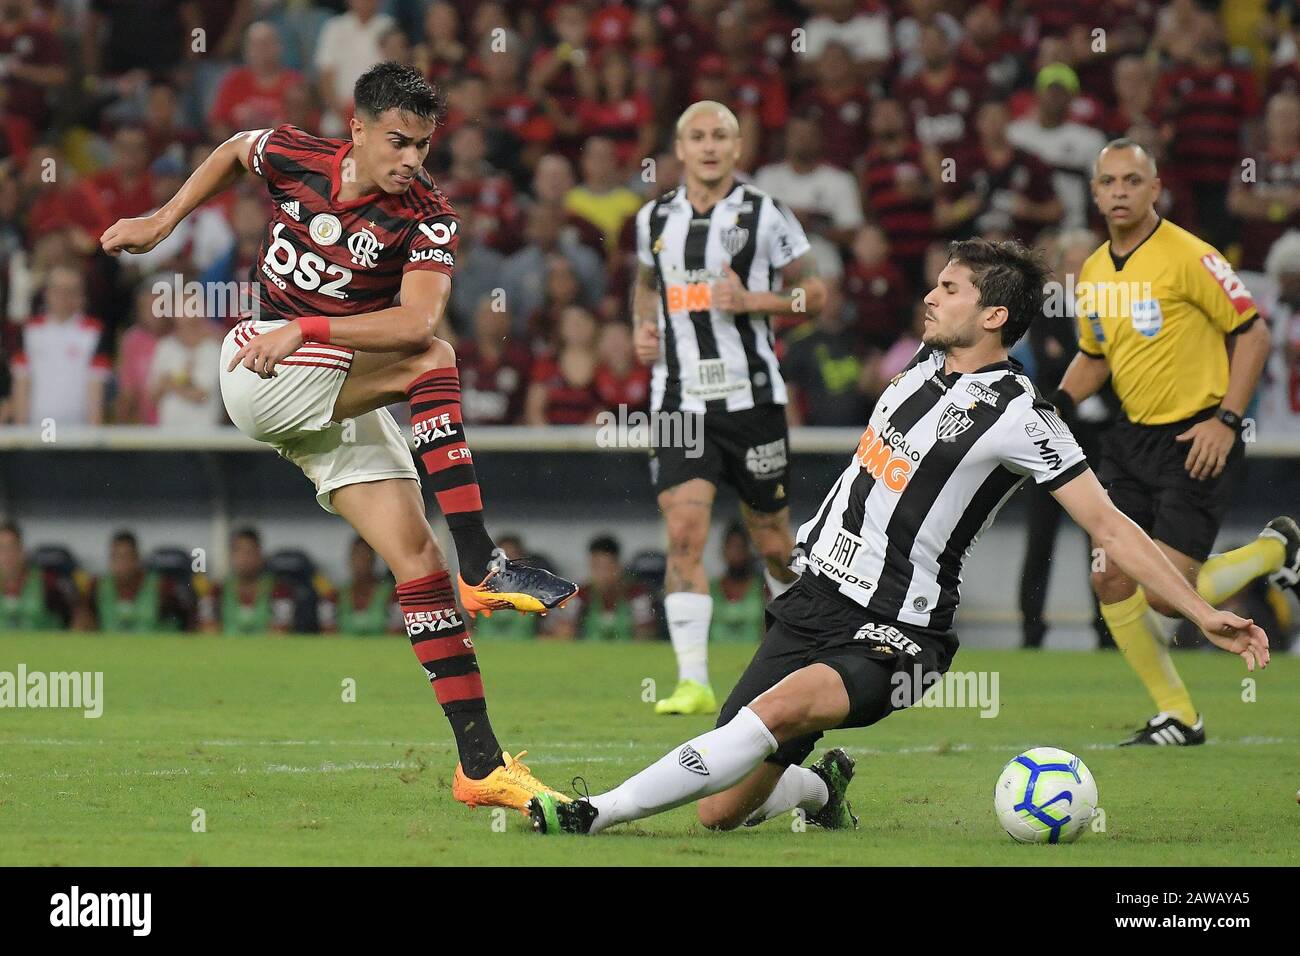 Rio de Janeiro, Brasilien, 10. Oktober 2019. Fußballspieler Reinier aus der Flamengo-Mannschaft, feiert sein Tor im Spiel gegen Atlético-MG in Mar Stockfoto